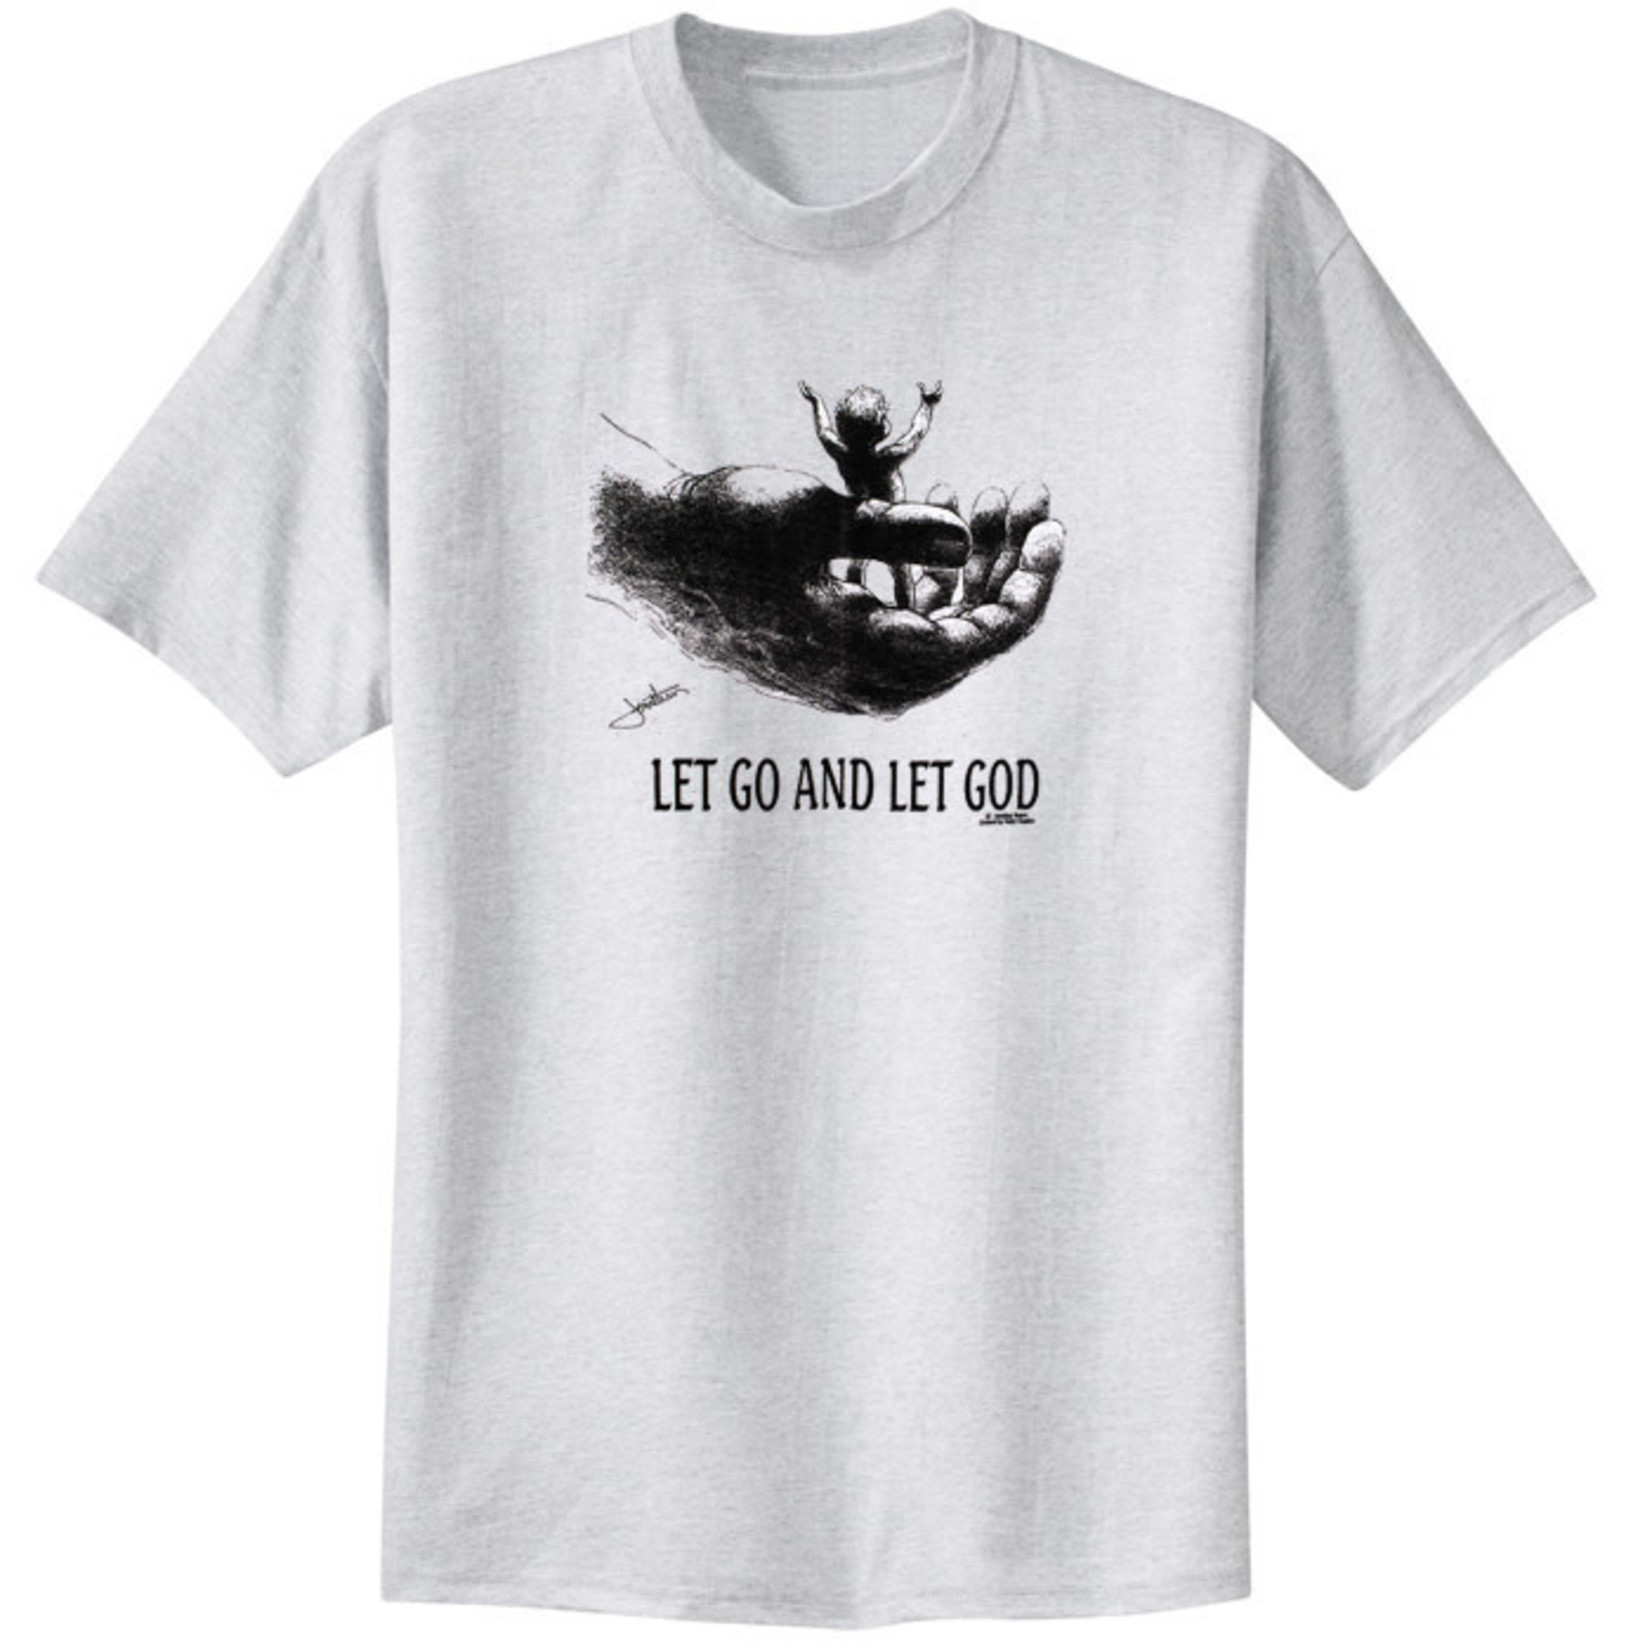 Shirts [Let Go And Let God]